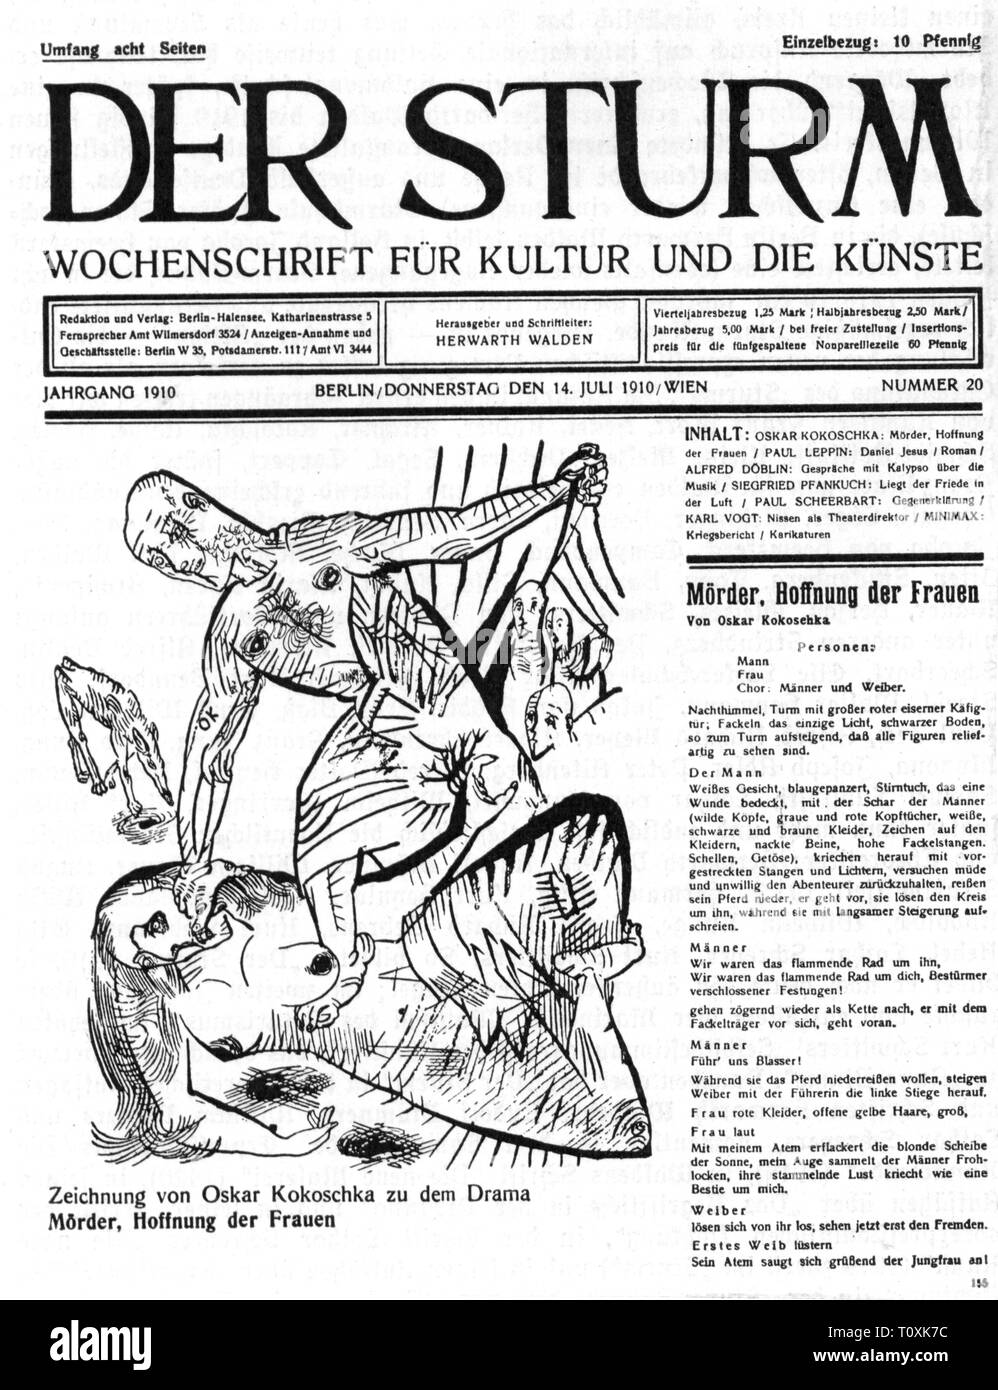 Presse/médias, magazines, 'Der Sturm' (La tempête), front page, éditeur : Herwarth Walden (1878 - 1941), illustration par Oskar Kokoschka pour le drame 'Moerder, Hoffnung der Frauen", numéro 20, Berlin, 14.7.1910, Additional-Rights Clearance-Info-Not-Available- Banque D'Images